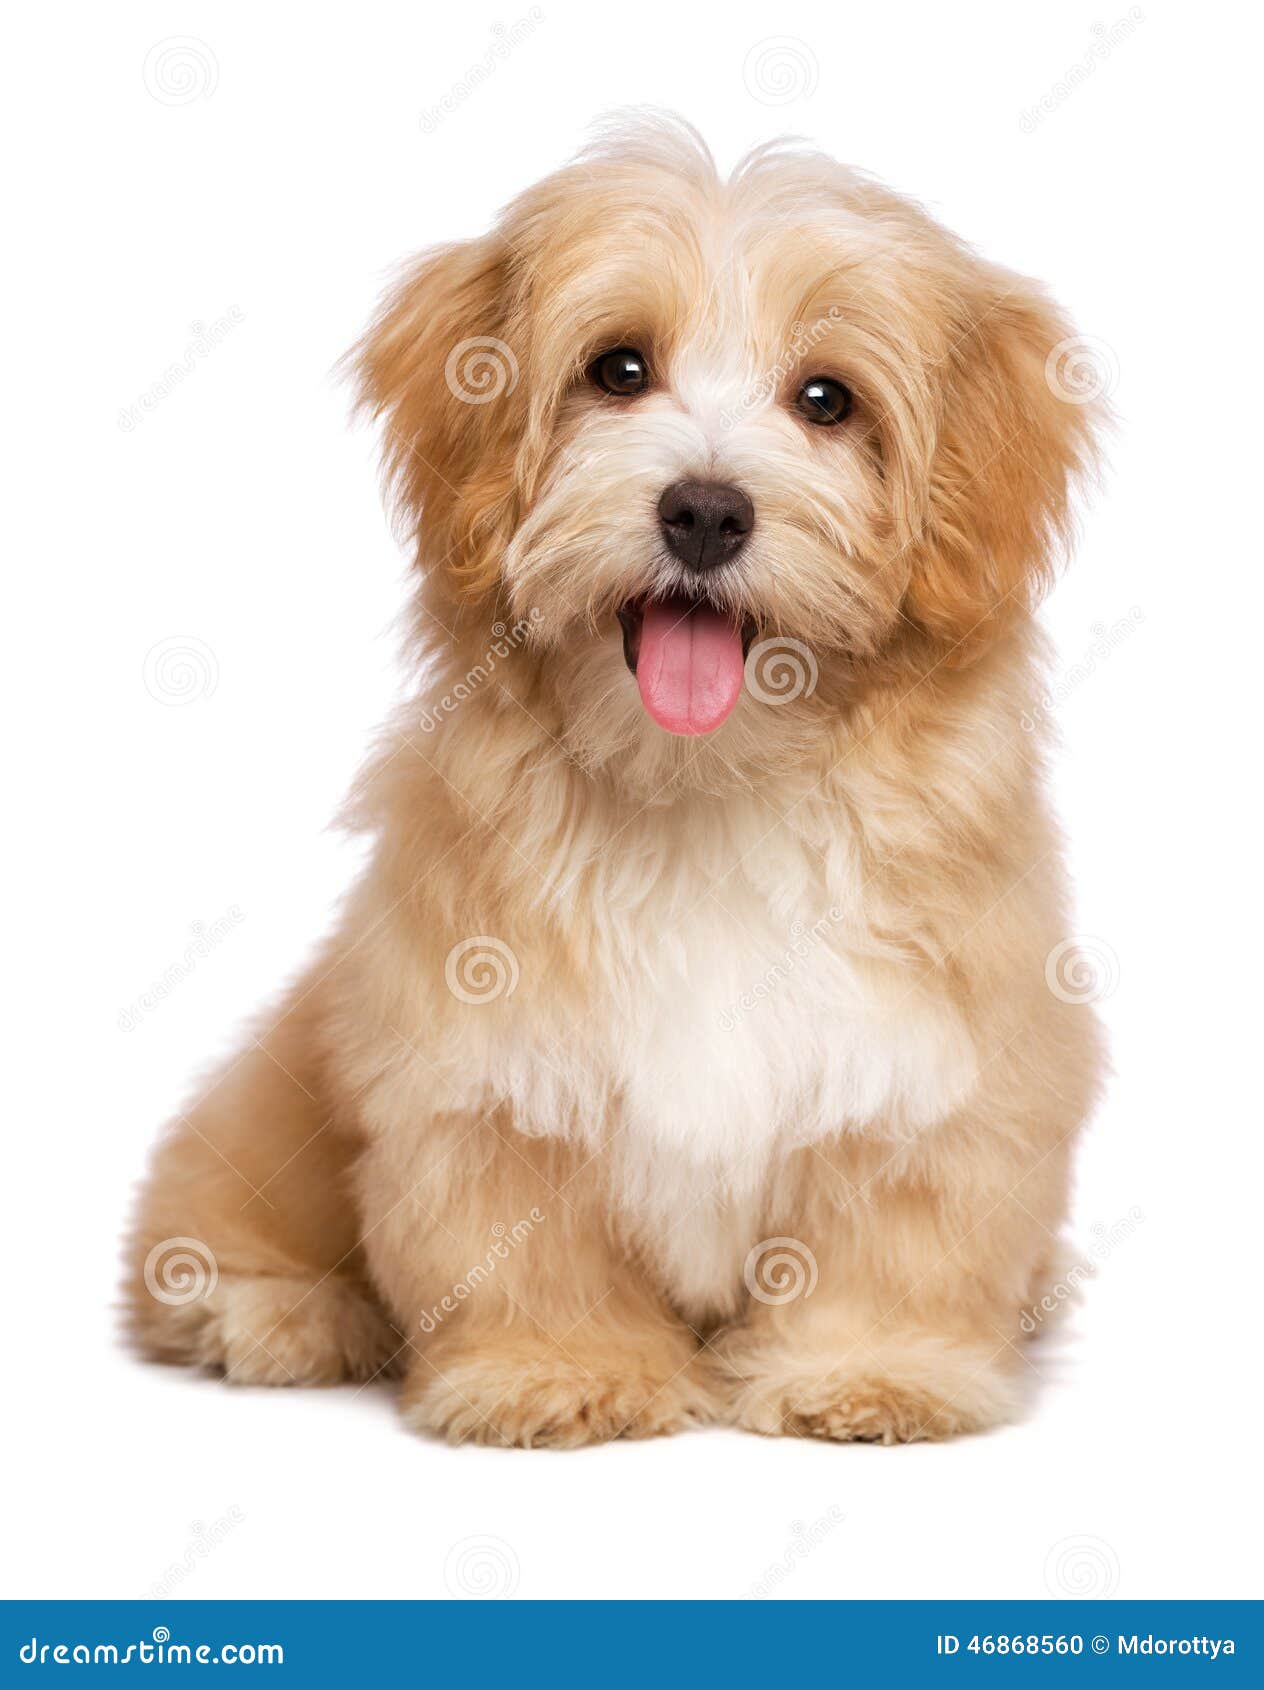 beautiful happy reddish havanese puppy dog is sitting frontal